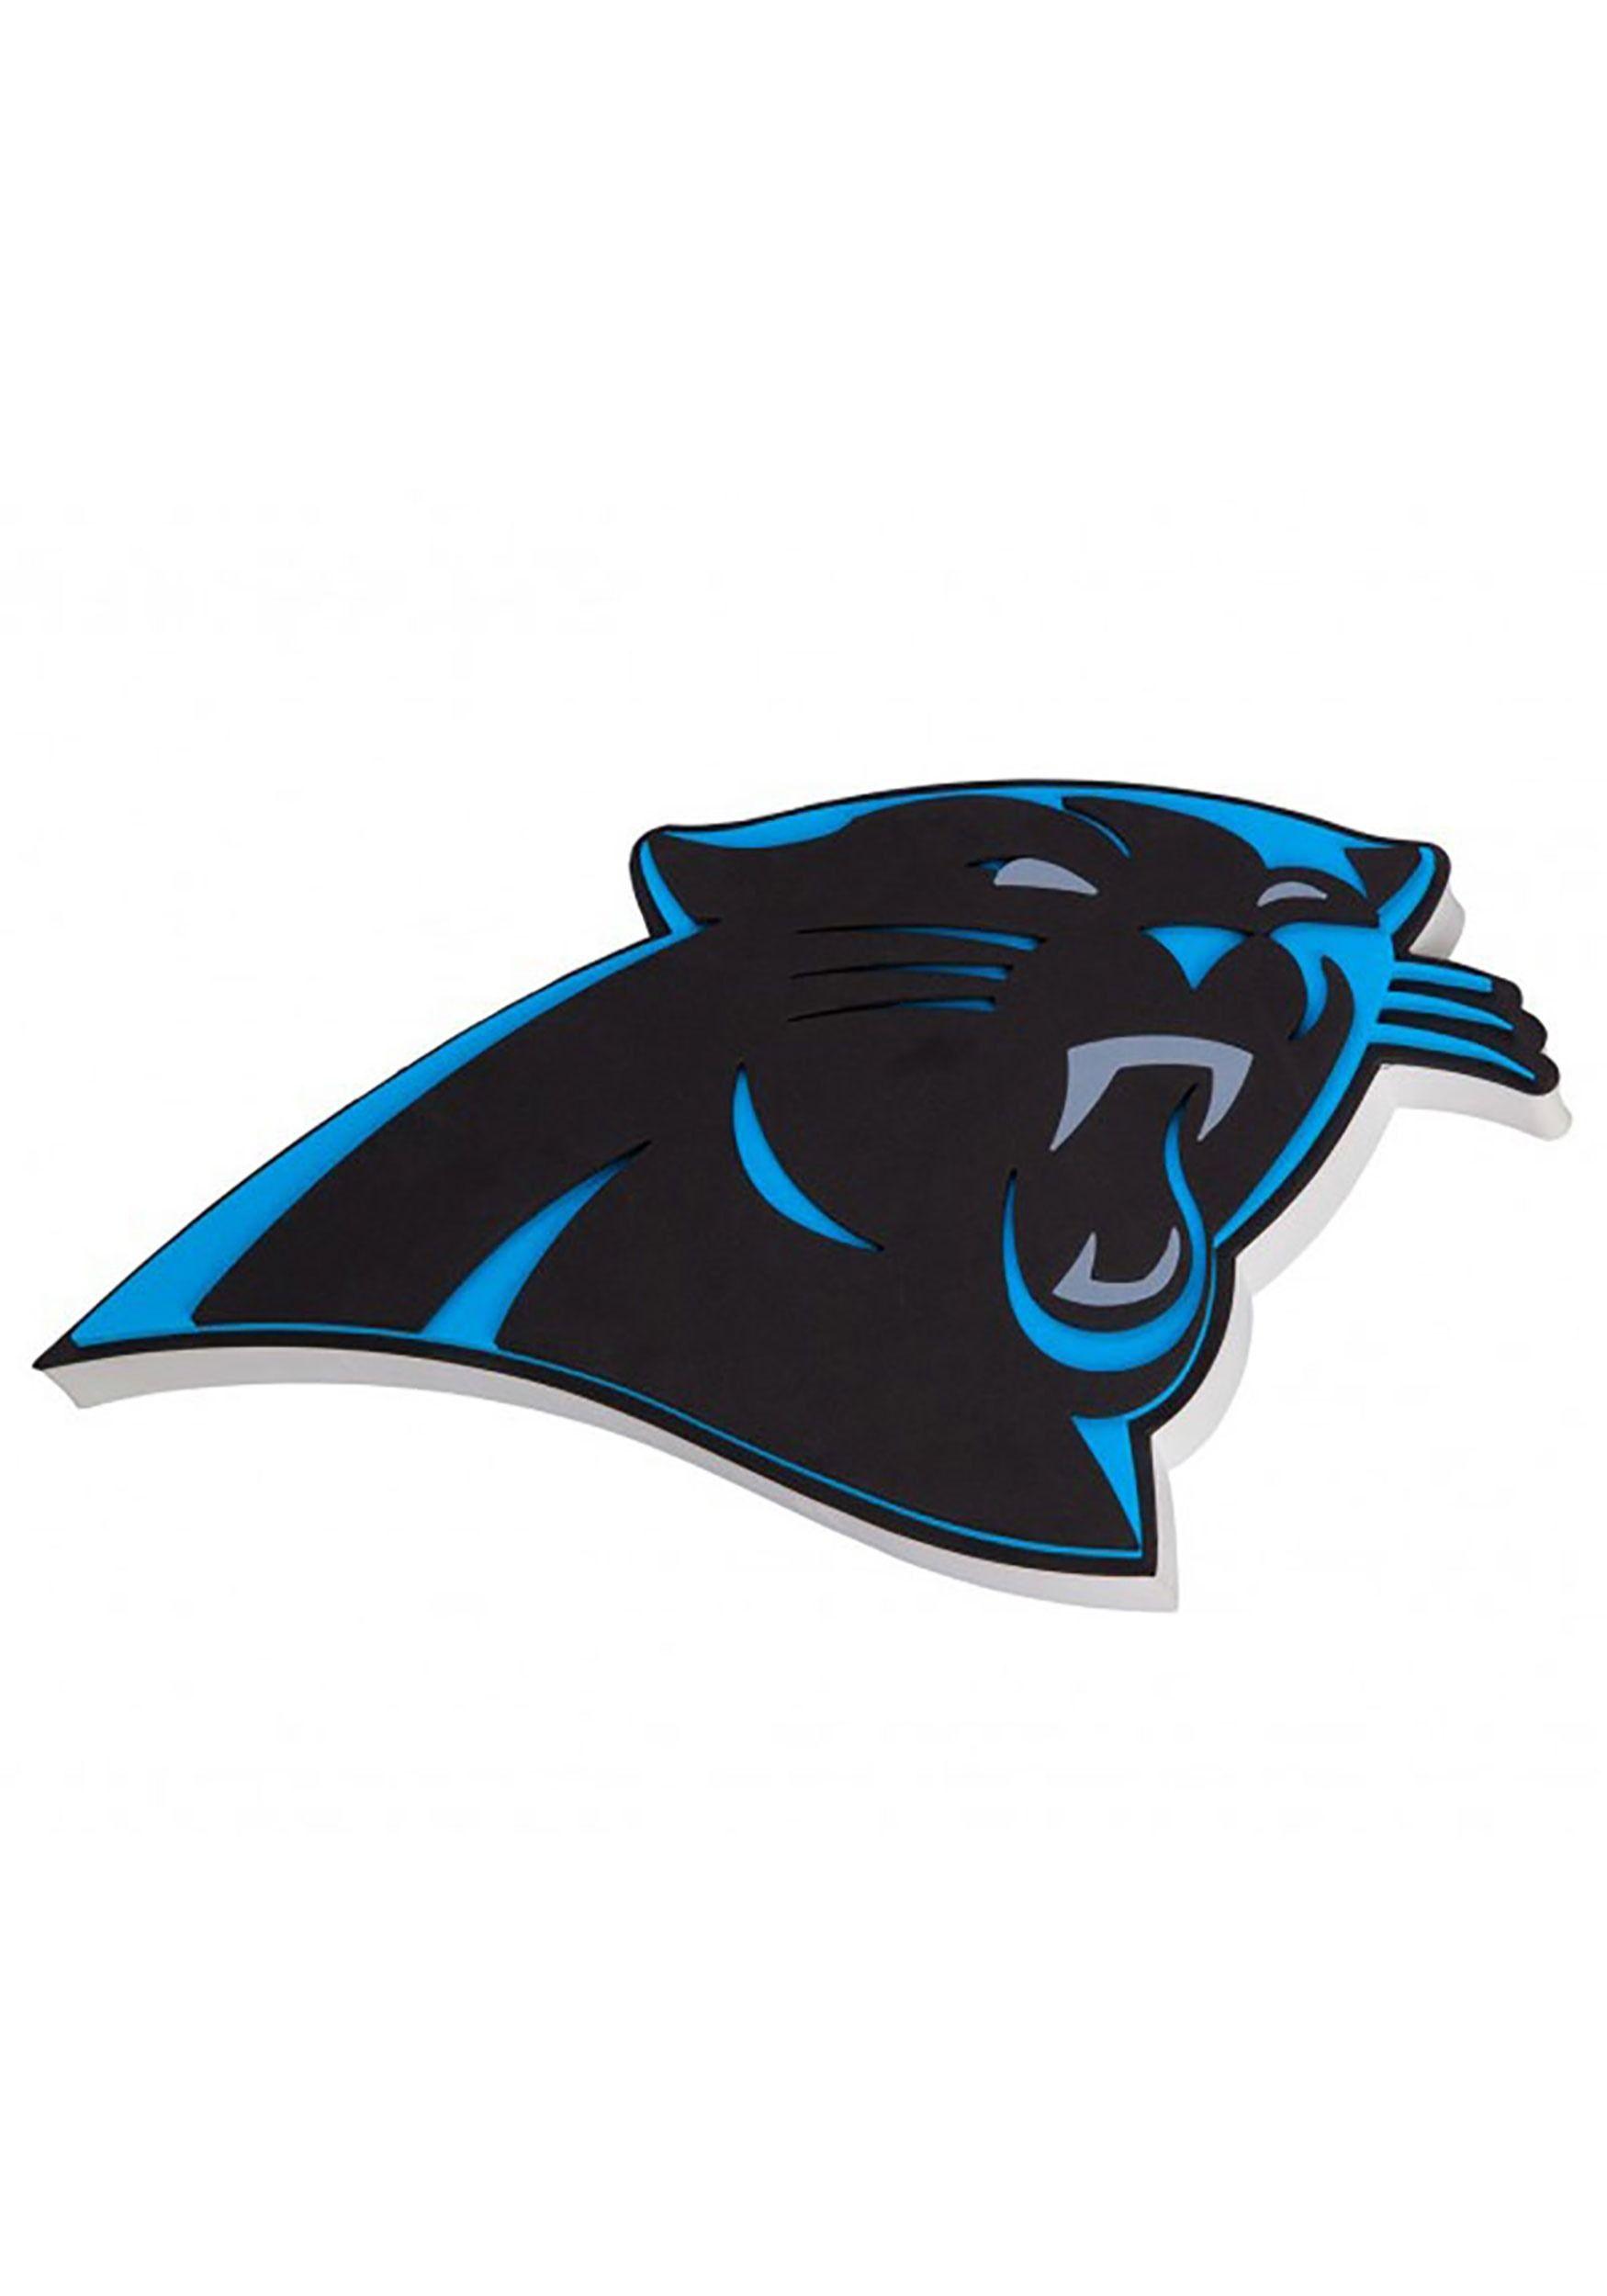 Panthers Logo - LogoDix